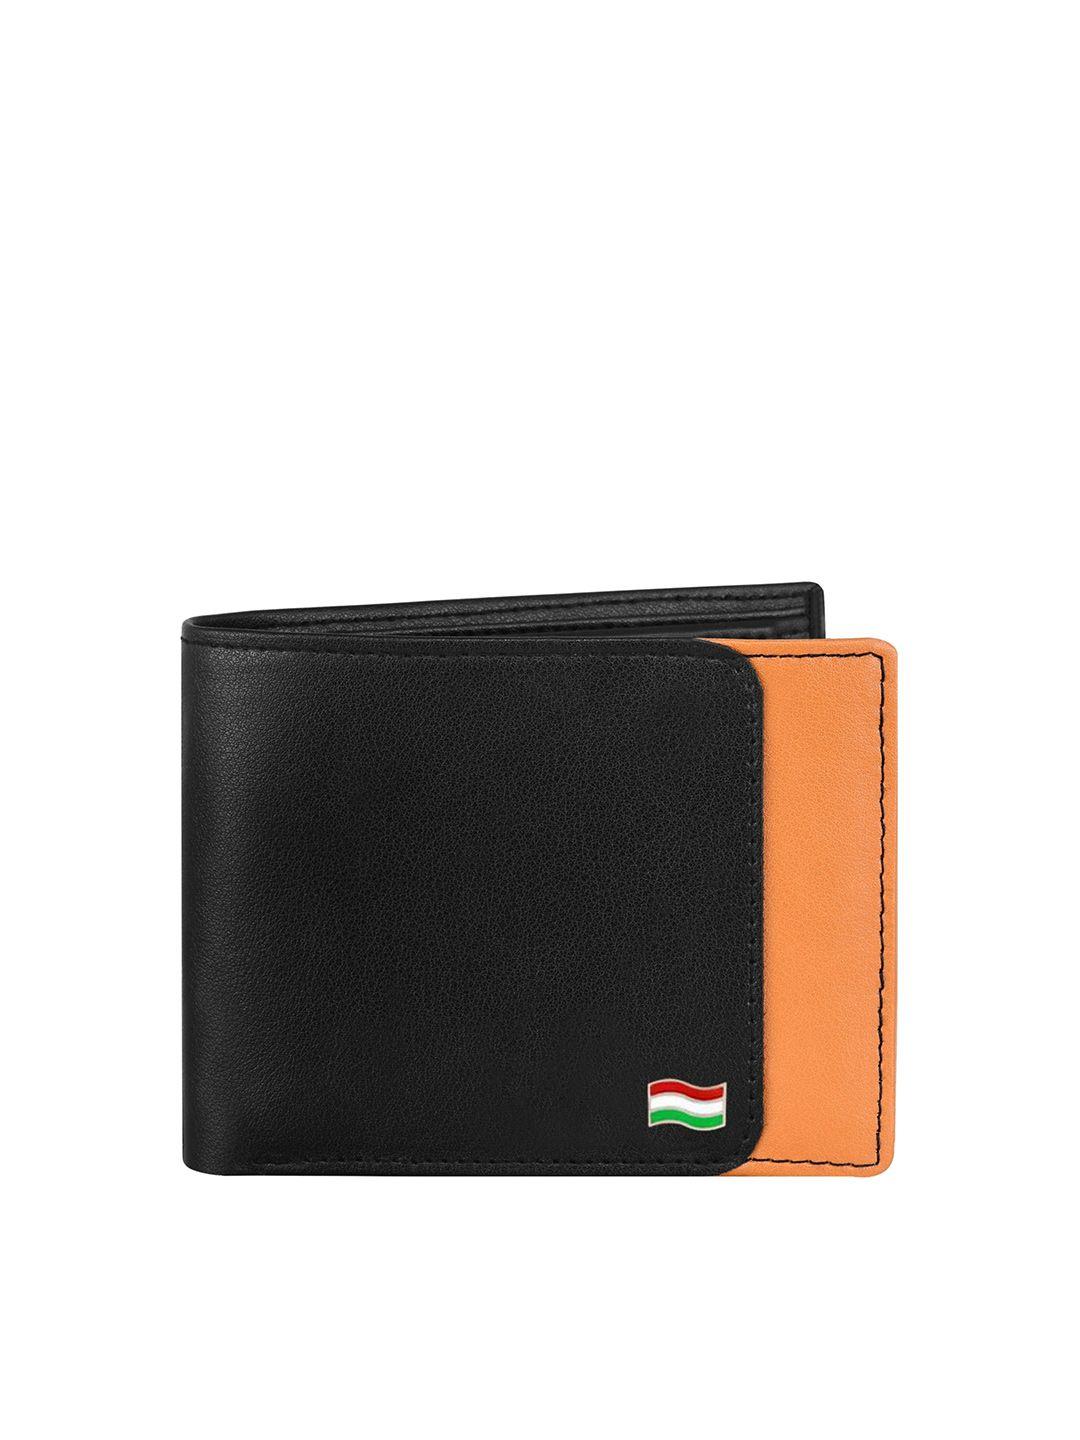 hamt men black leather two fold wallet